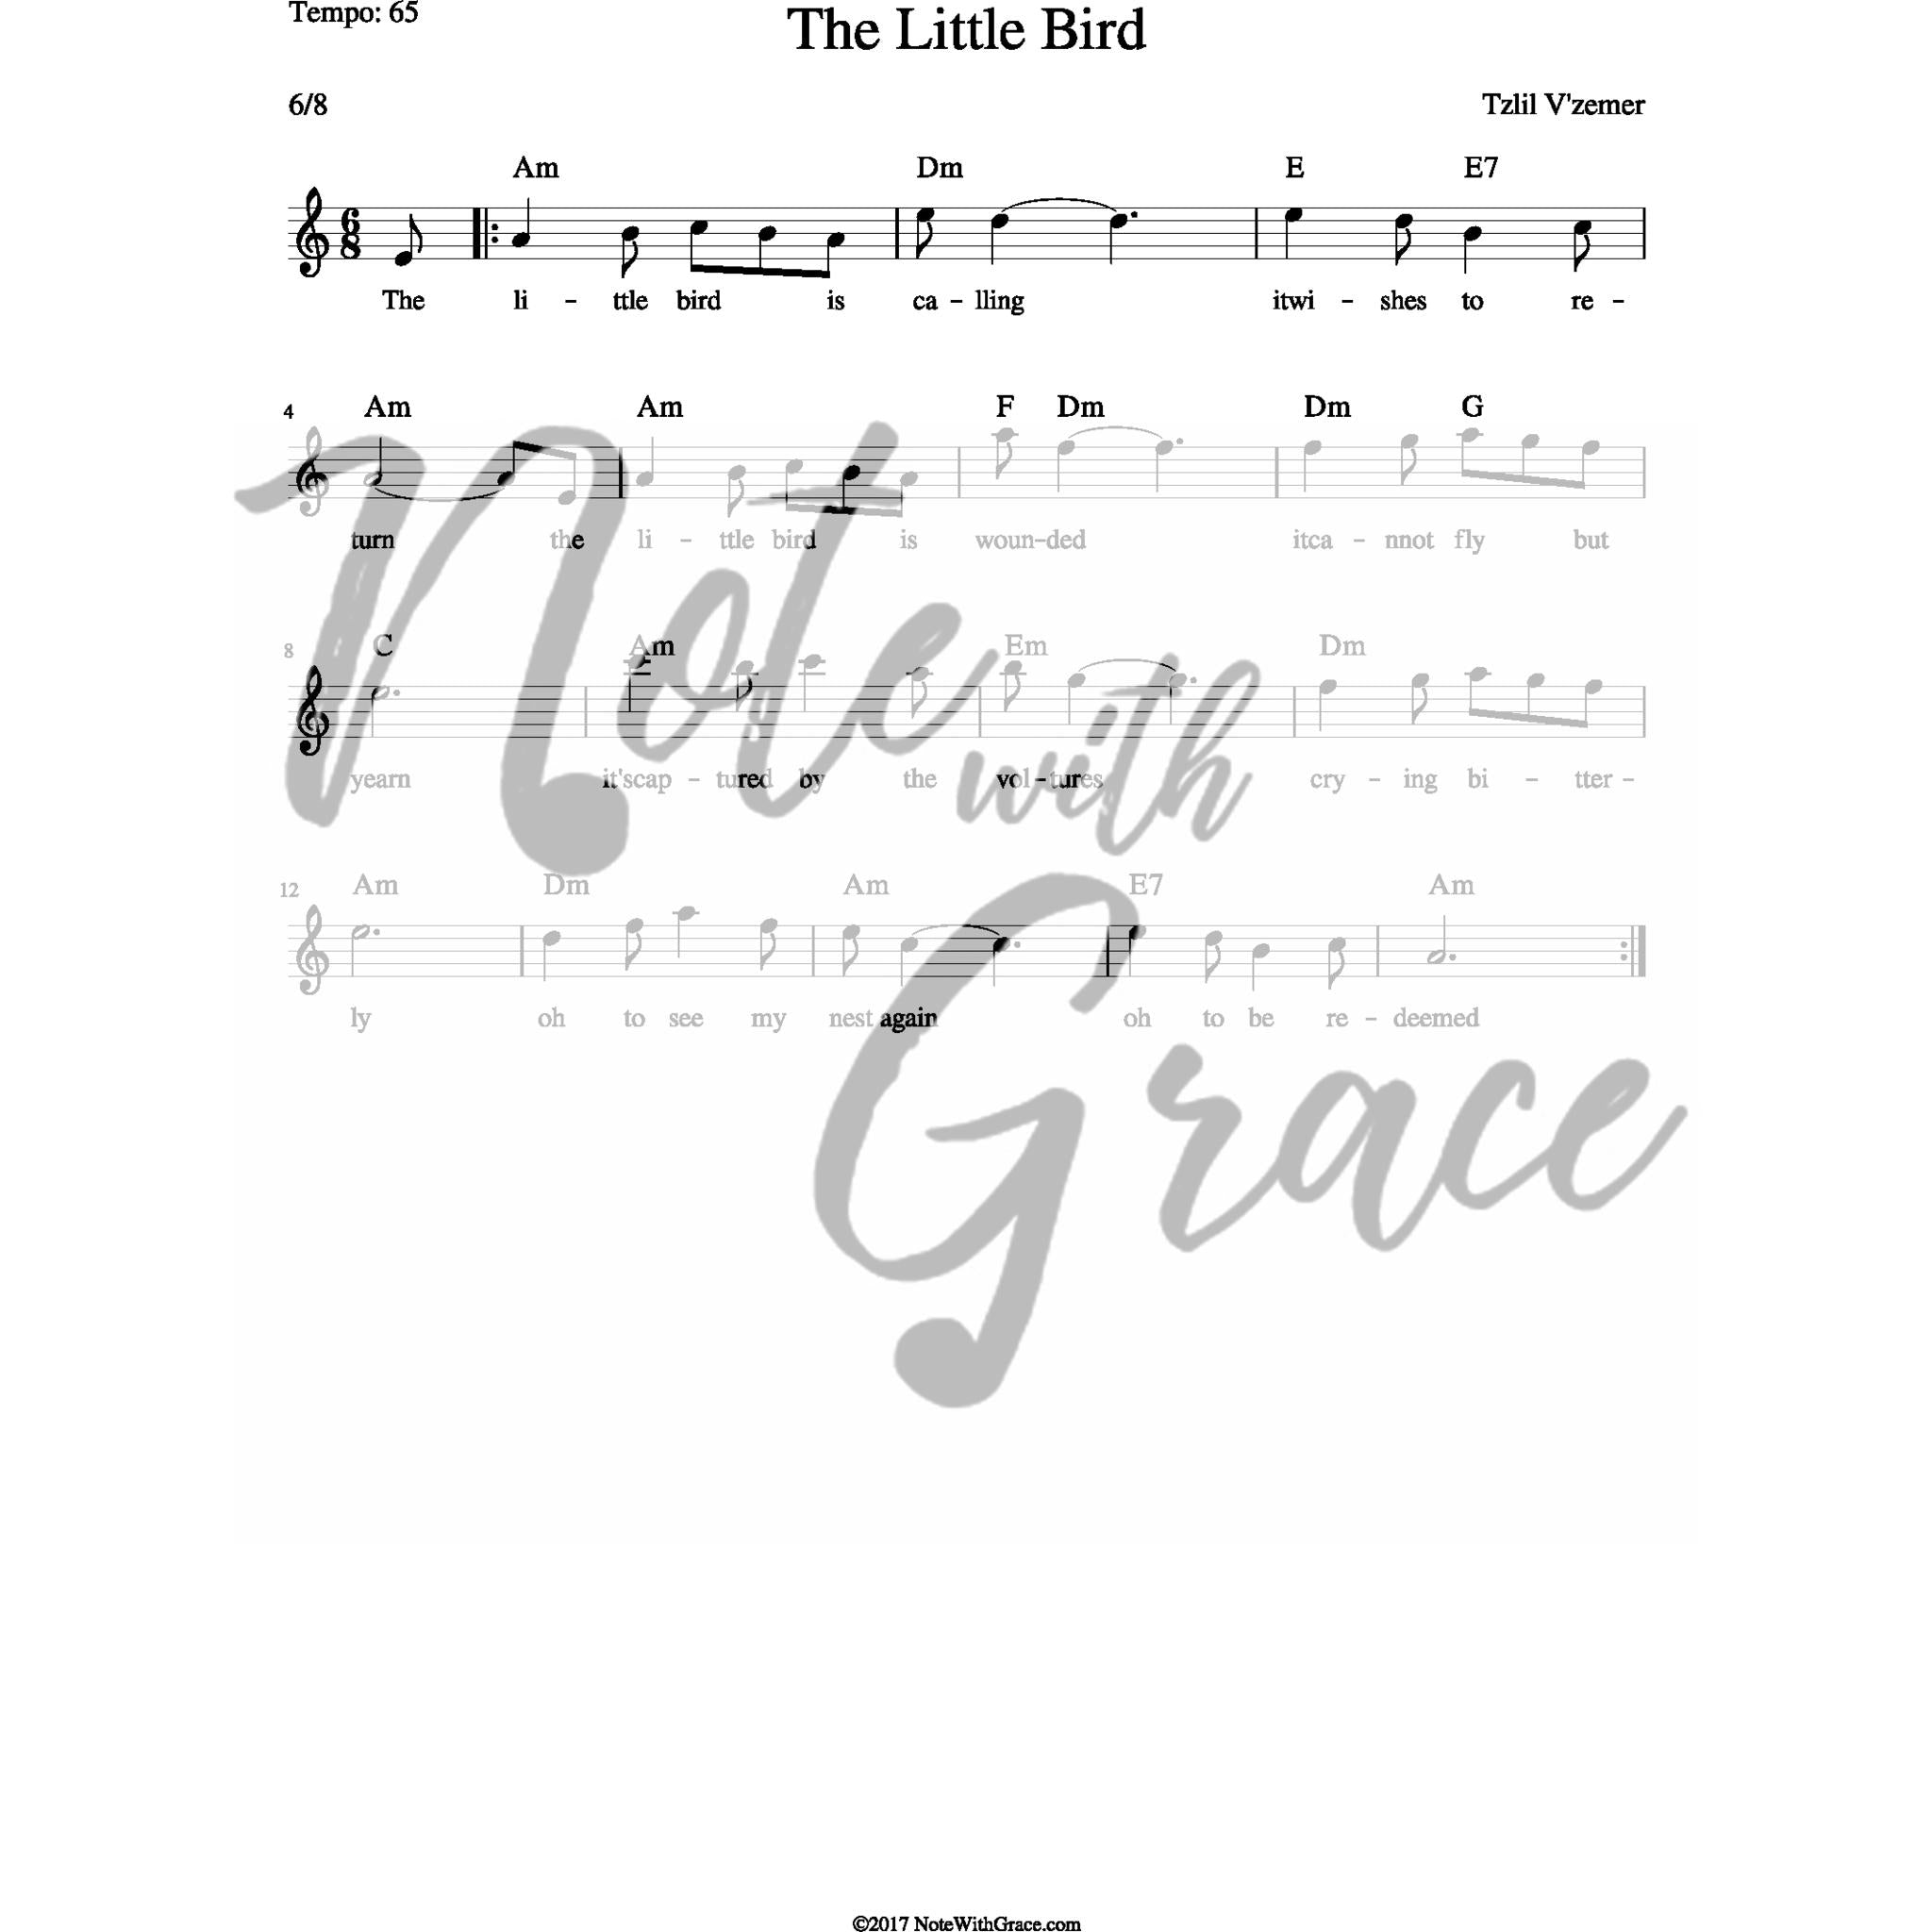 The Little Bird Lead Sheet (MBD)-Sheet music-NoteWithGrace.com